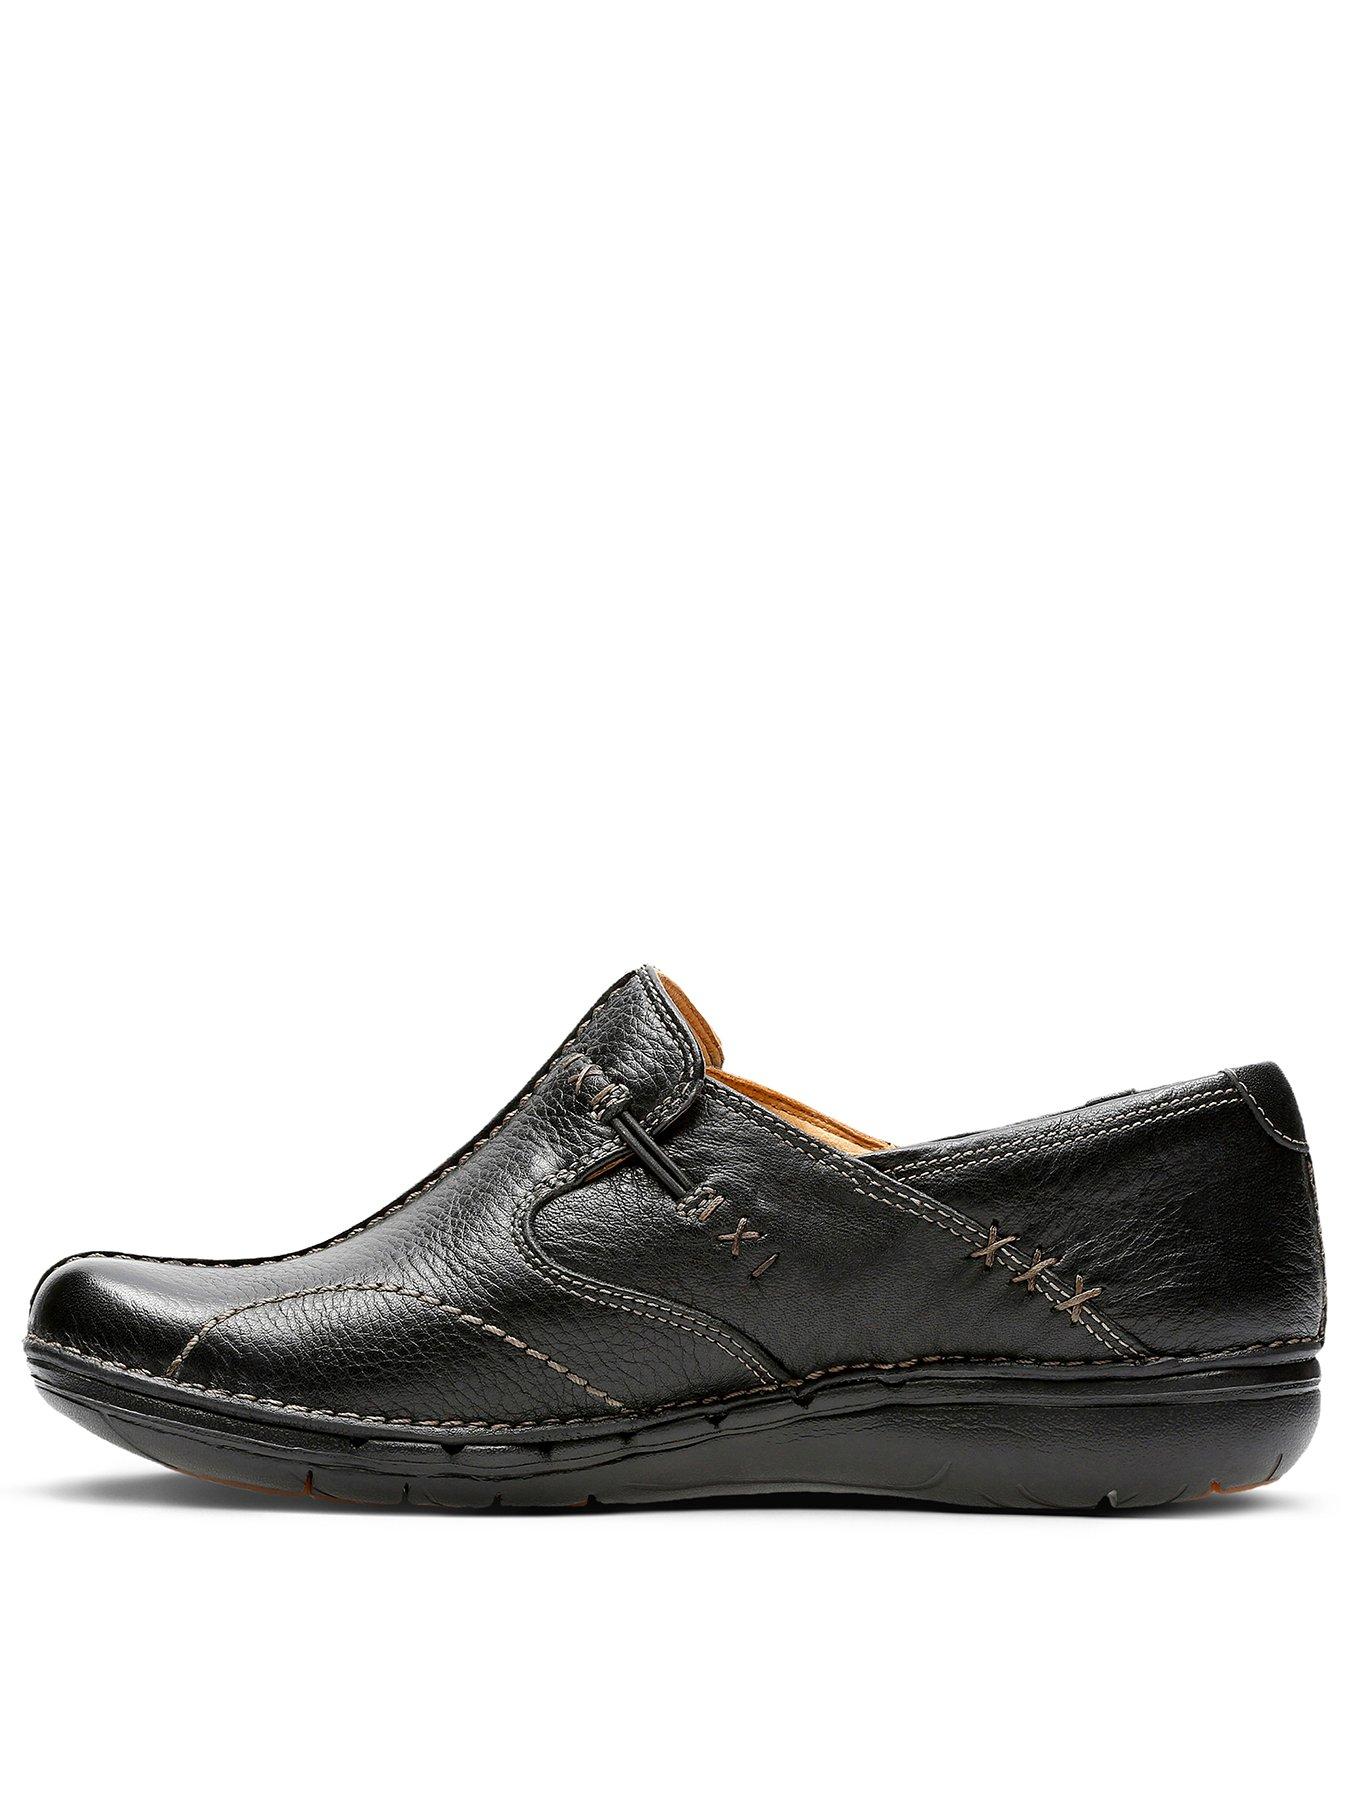 Clarks Un Loop Flat Leather Shoe - Black 